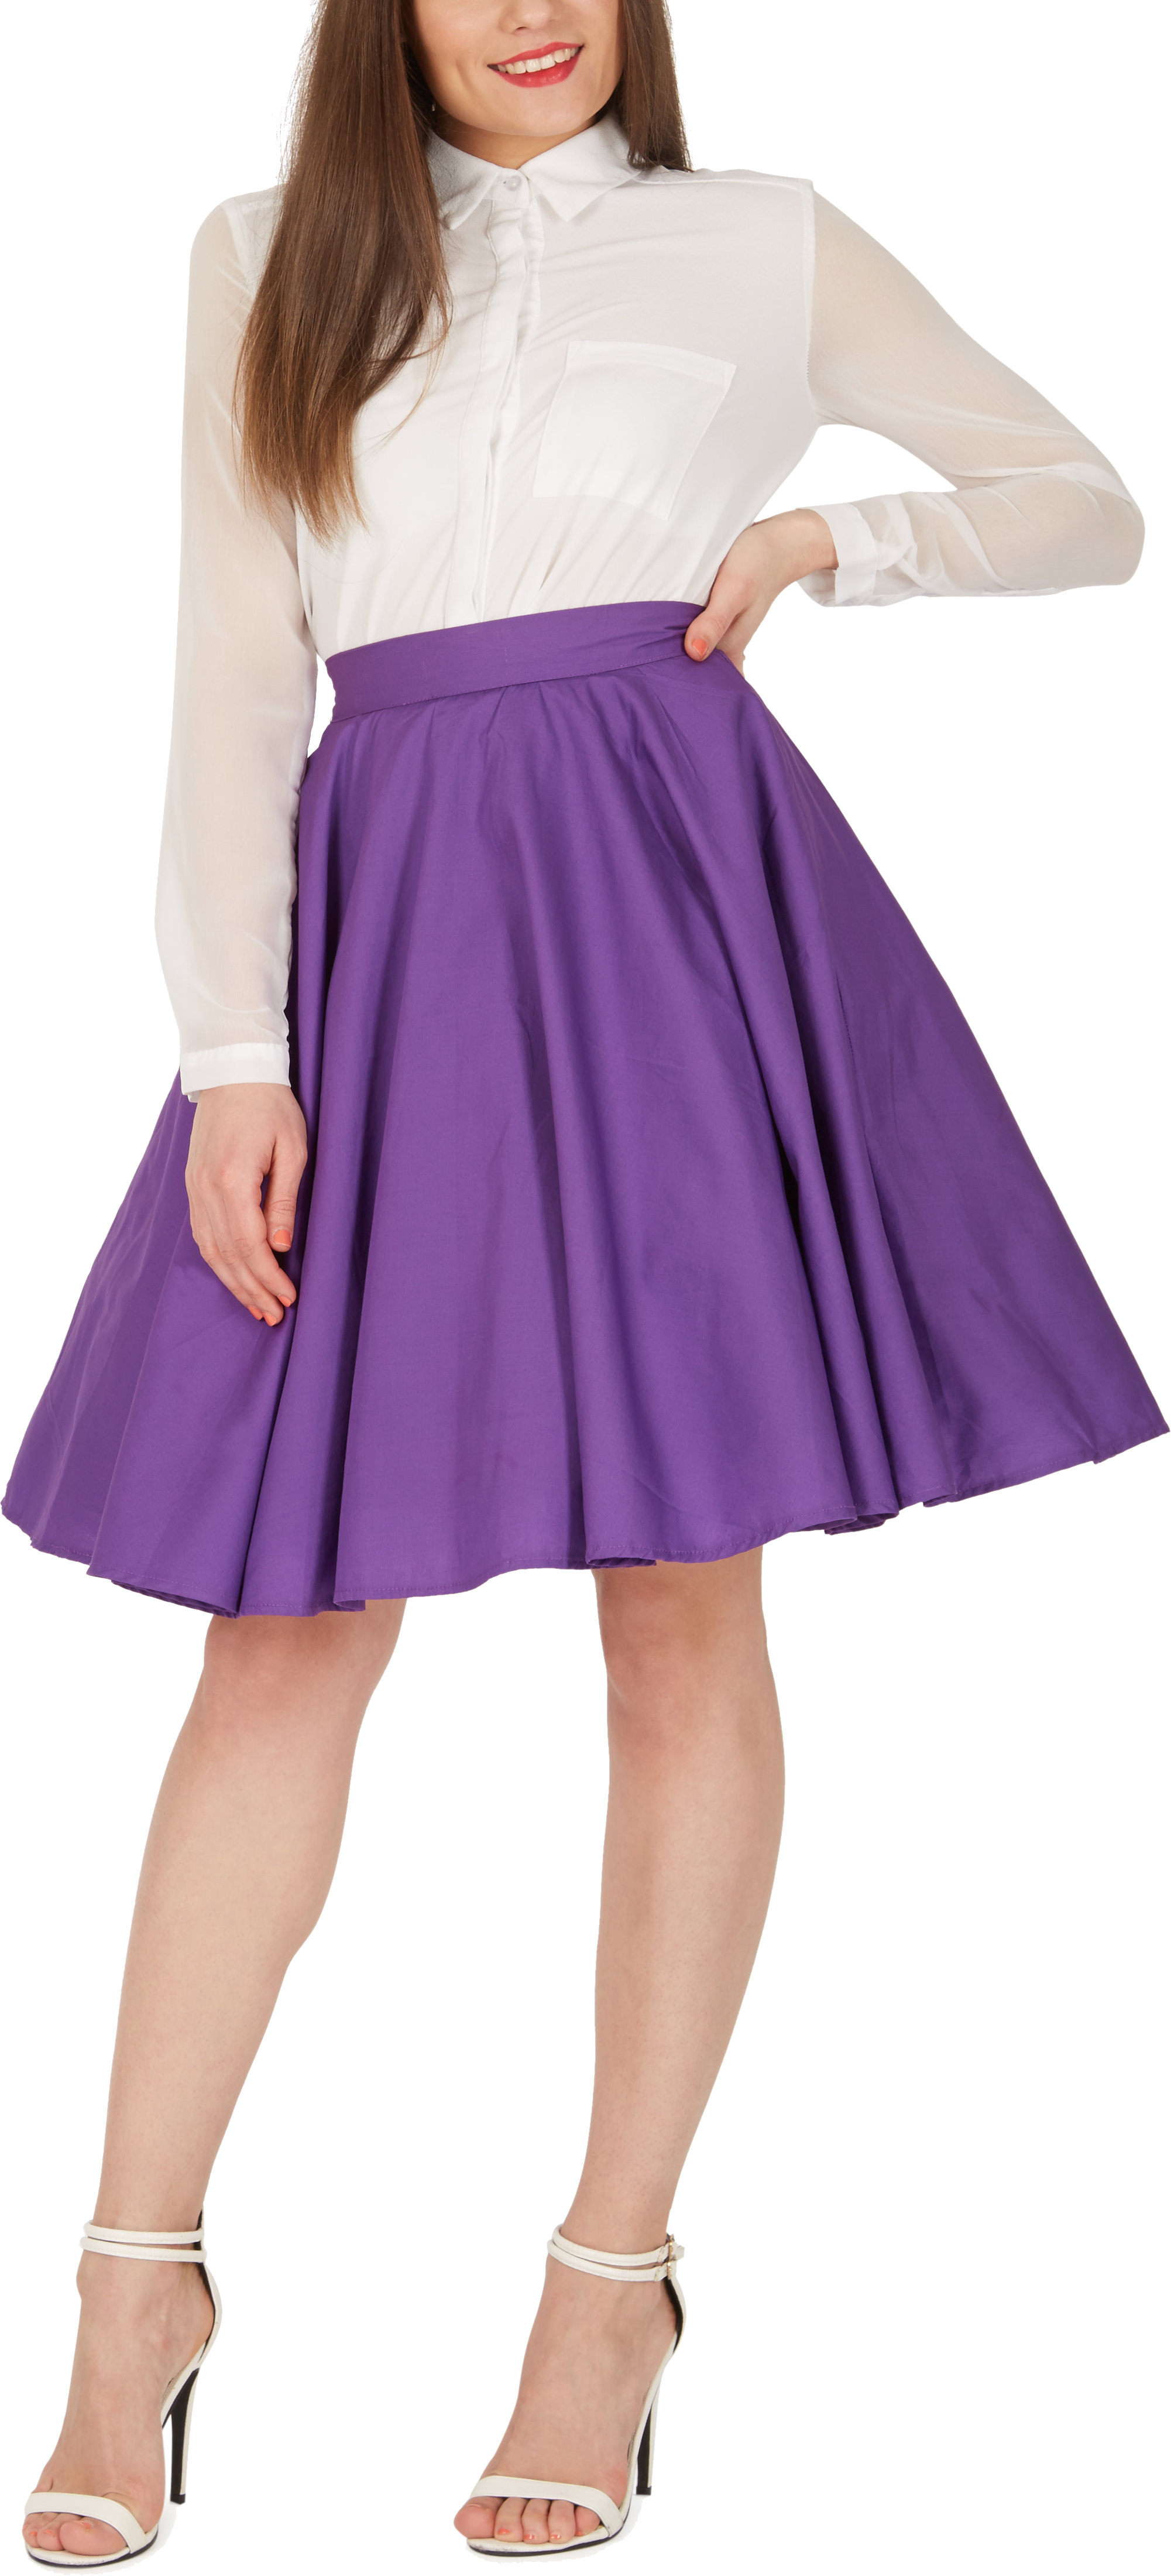 Vintage 1950s style dark purple full circle rock n roll swing skirt M to 3XL 